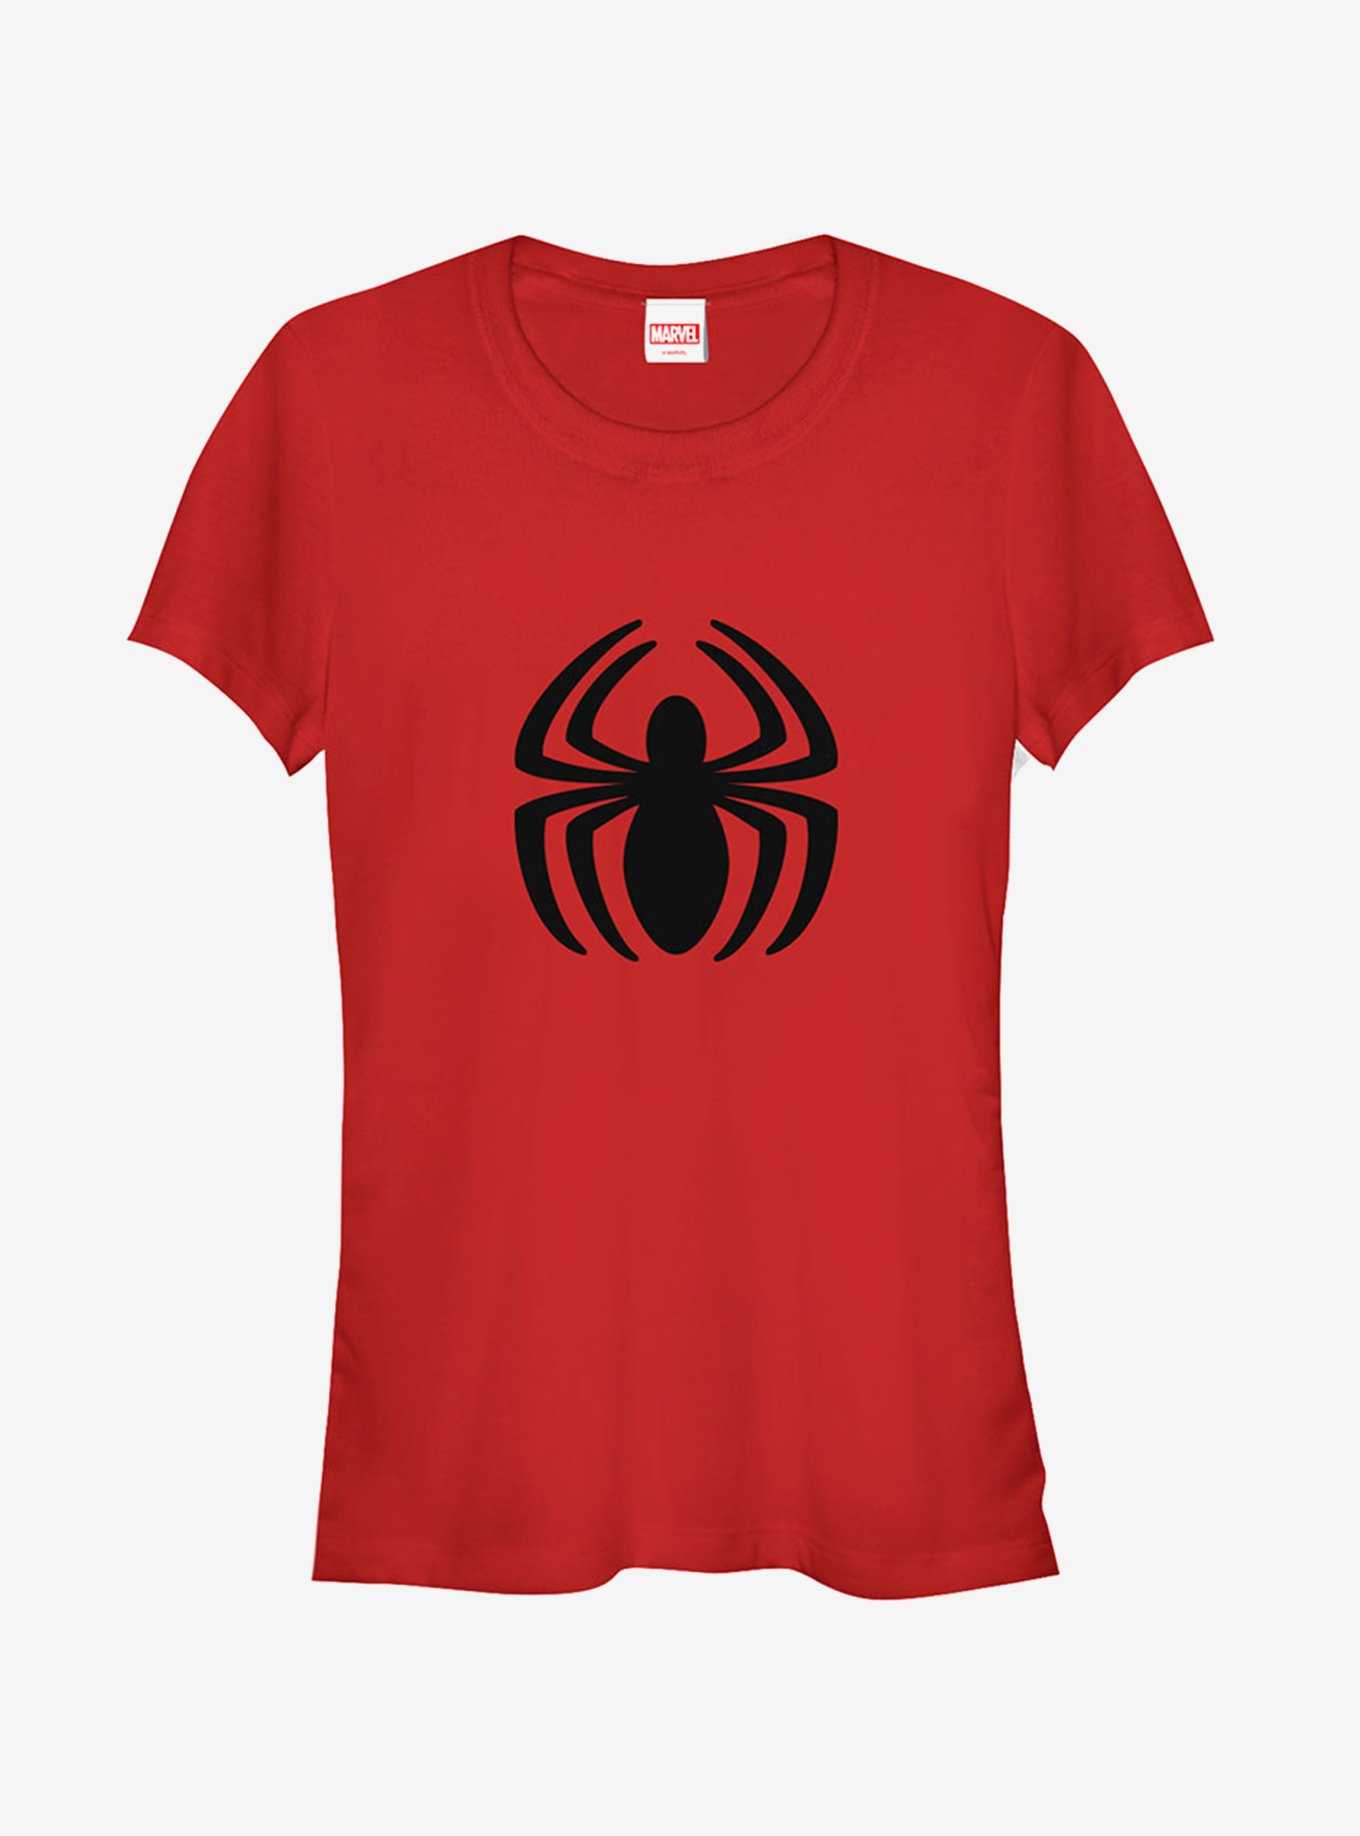 Marvel Spider-Man Eight-legged Logo Girls T-Shirt, , hi-res